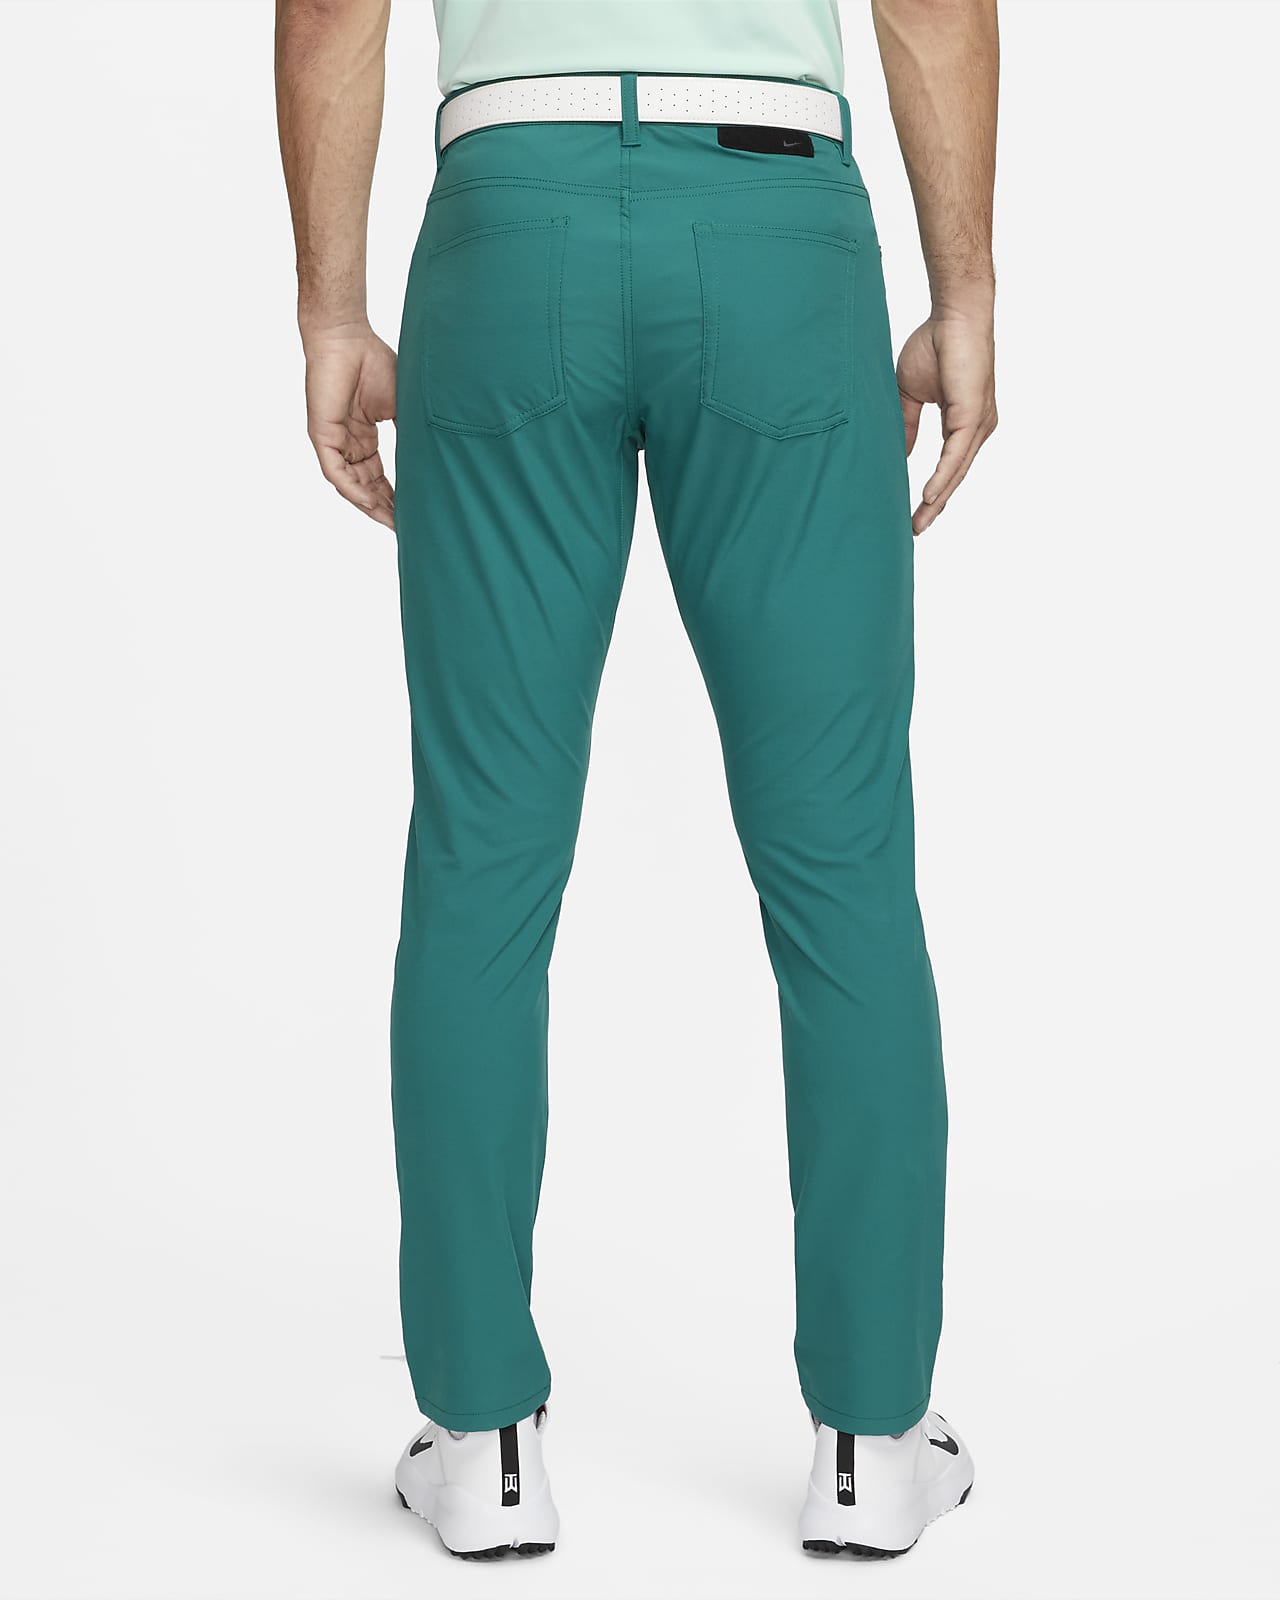 Pantalones de Golf ajuste de 5 bolsillos para hombre Nike Dri-FIT Repel. Nike.com